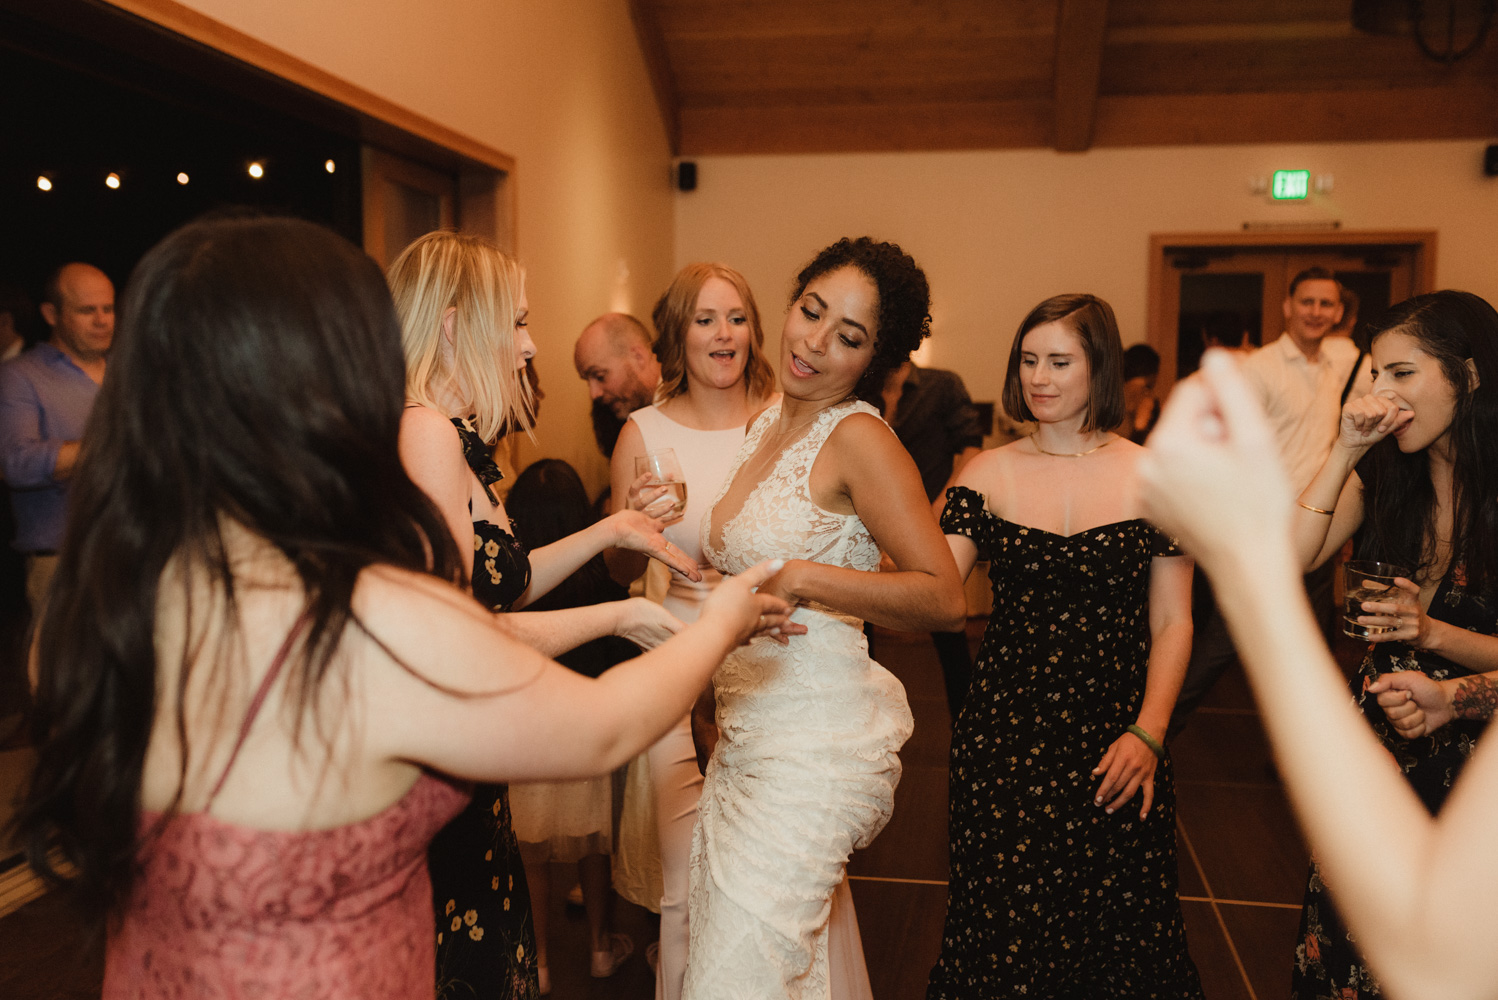 Rush Creek Lodge wedding, bride dancing with her friends photo